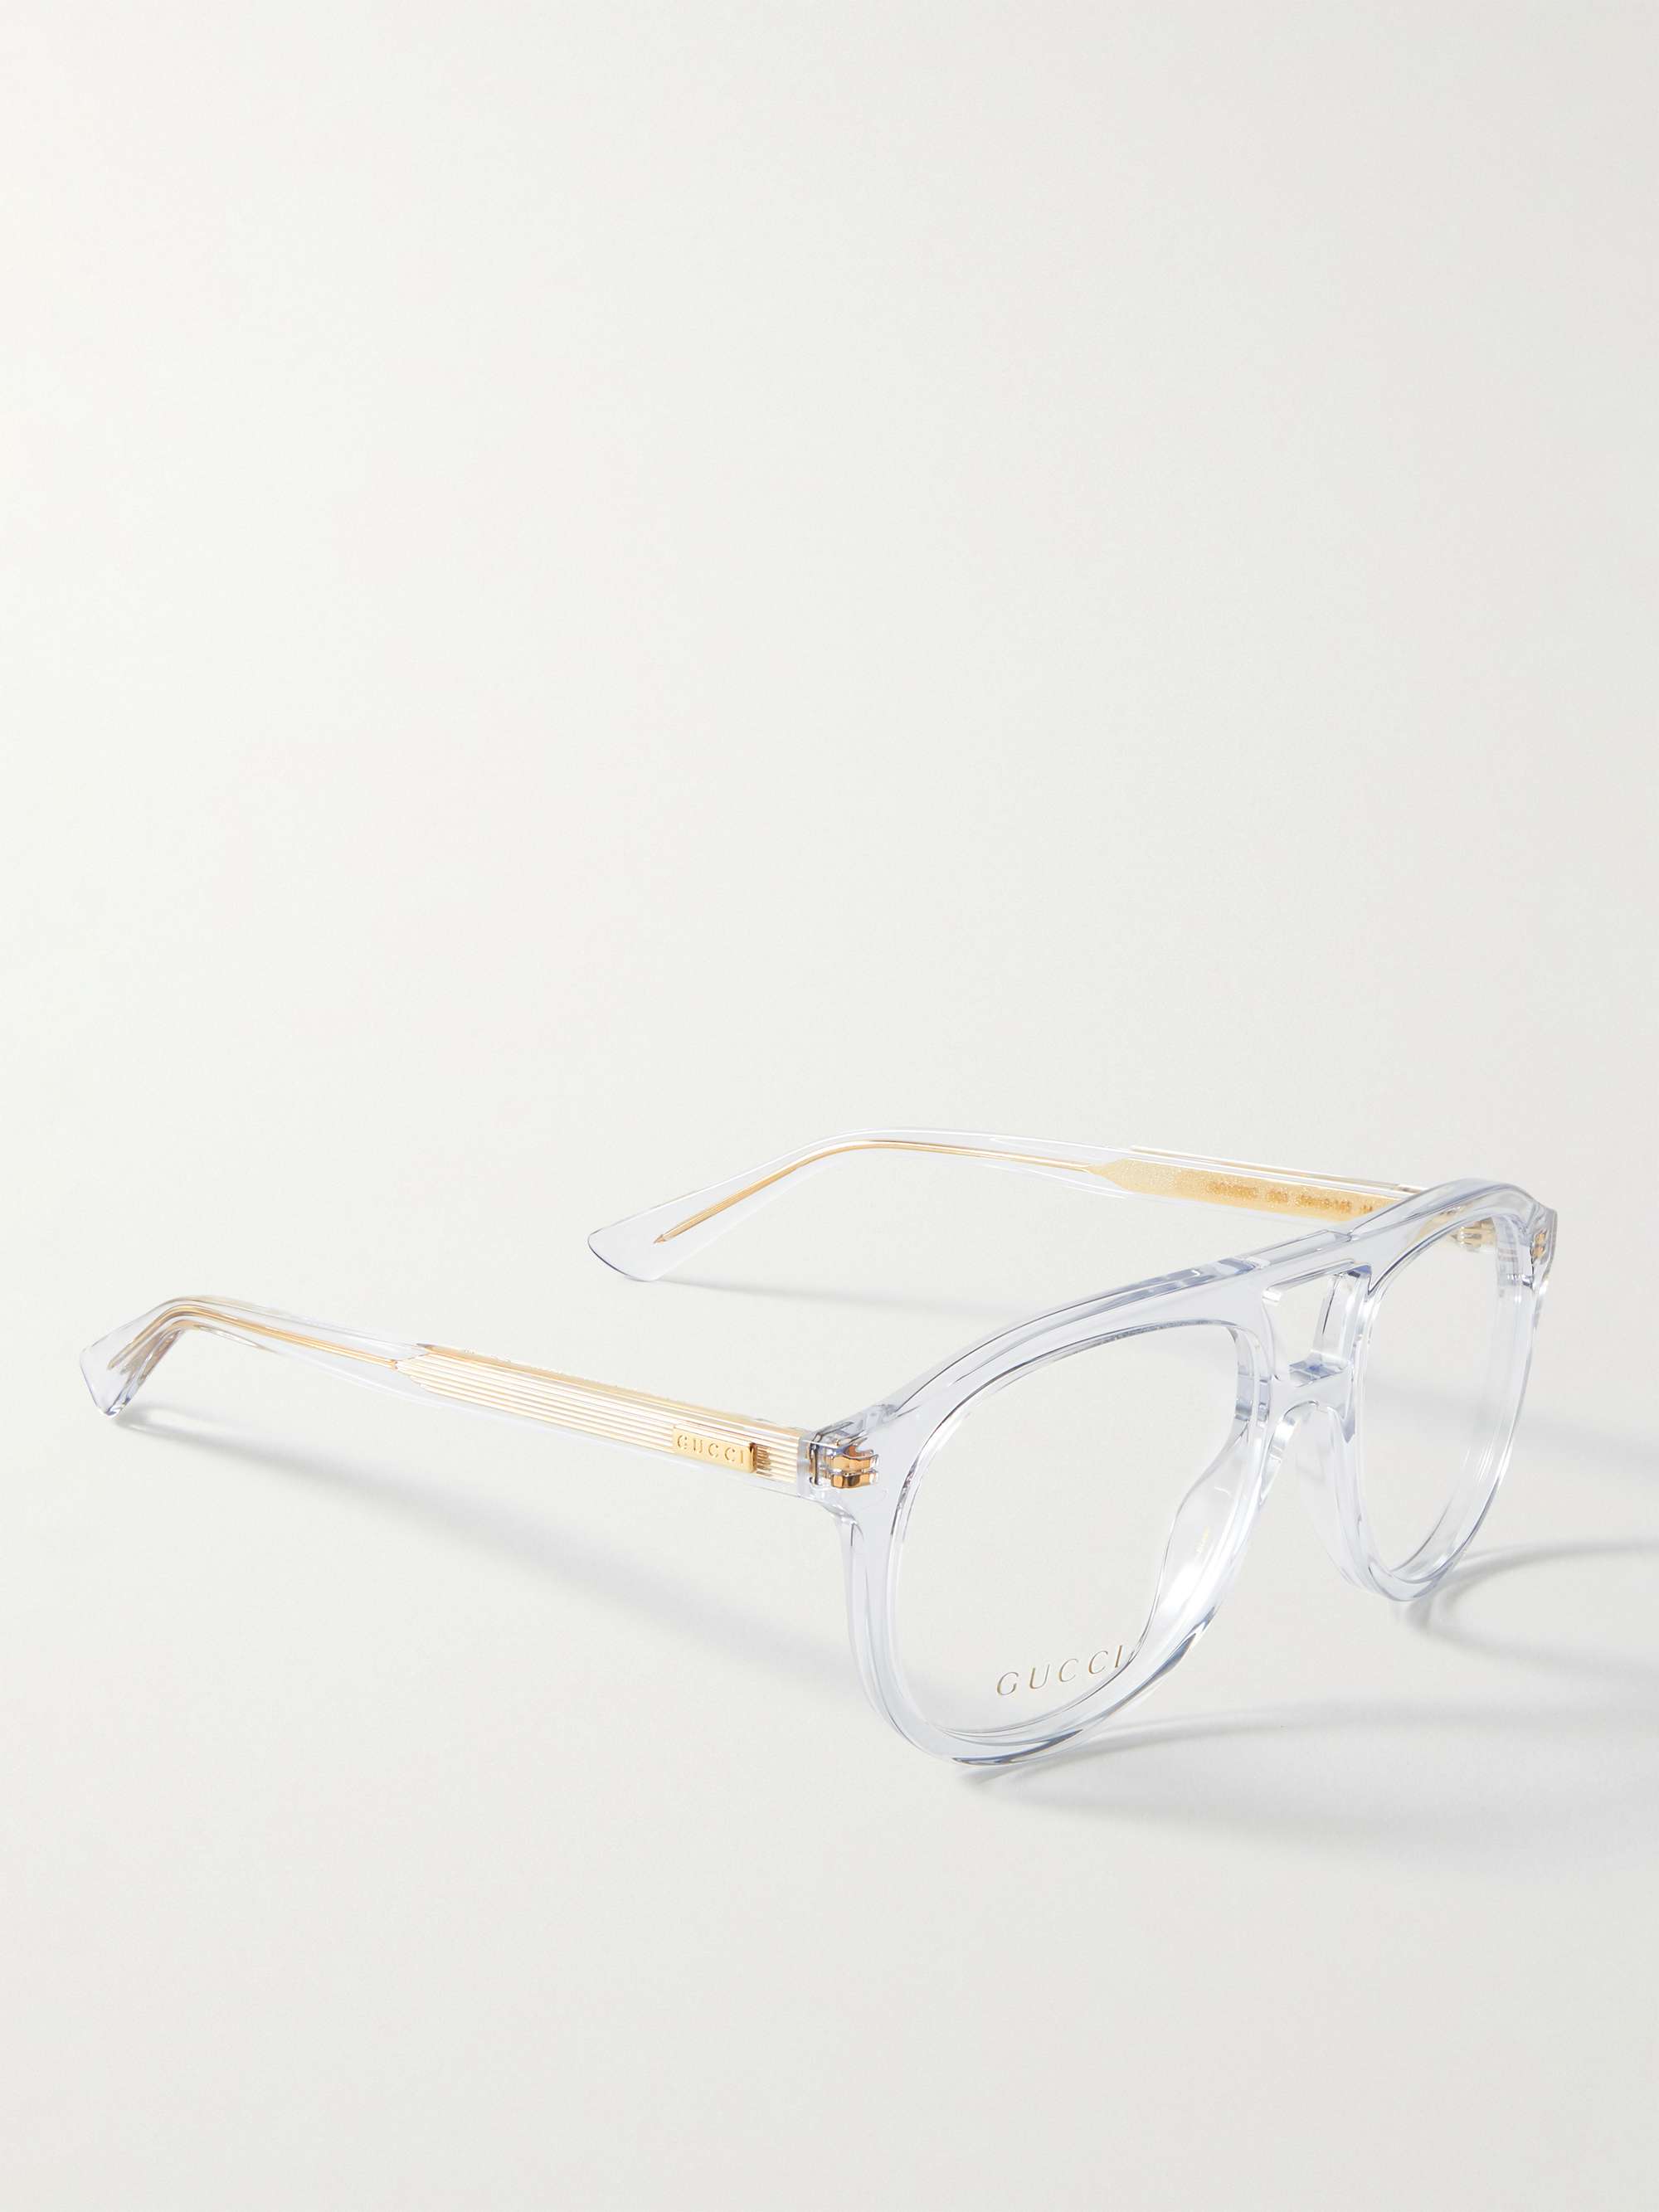 GUCCI EYEWEAR '80s Monaco Aviator-Style Acetate Optical Glasses | MR PORTER